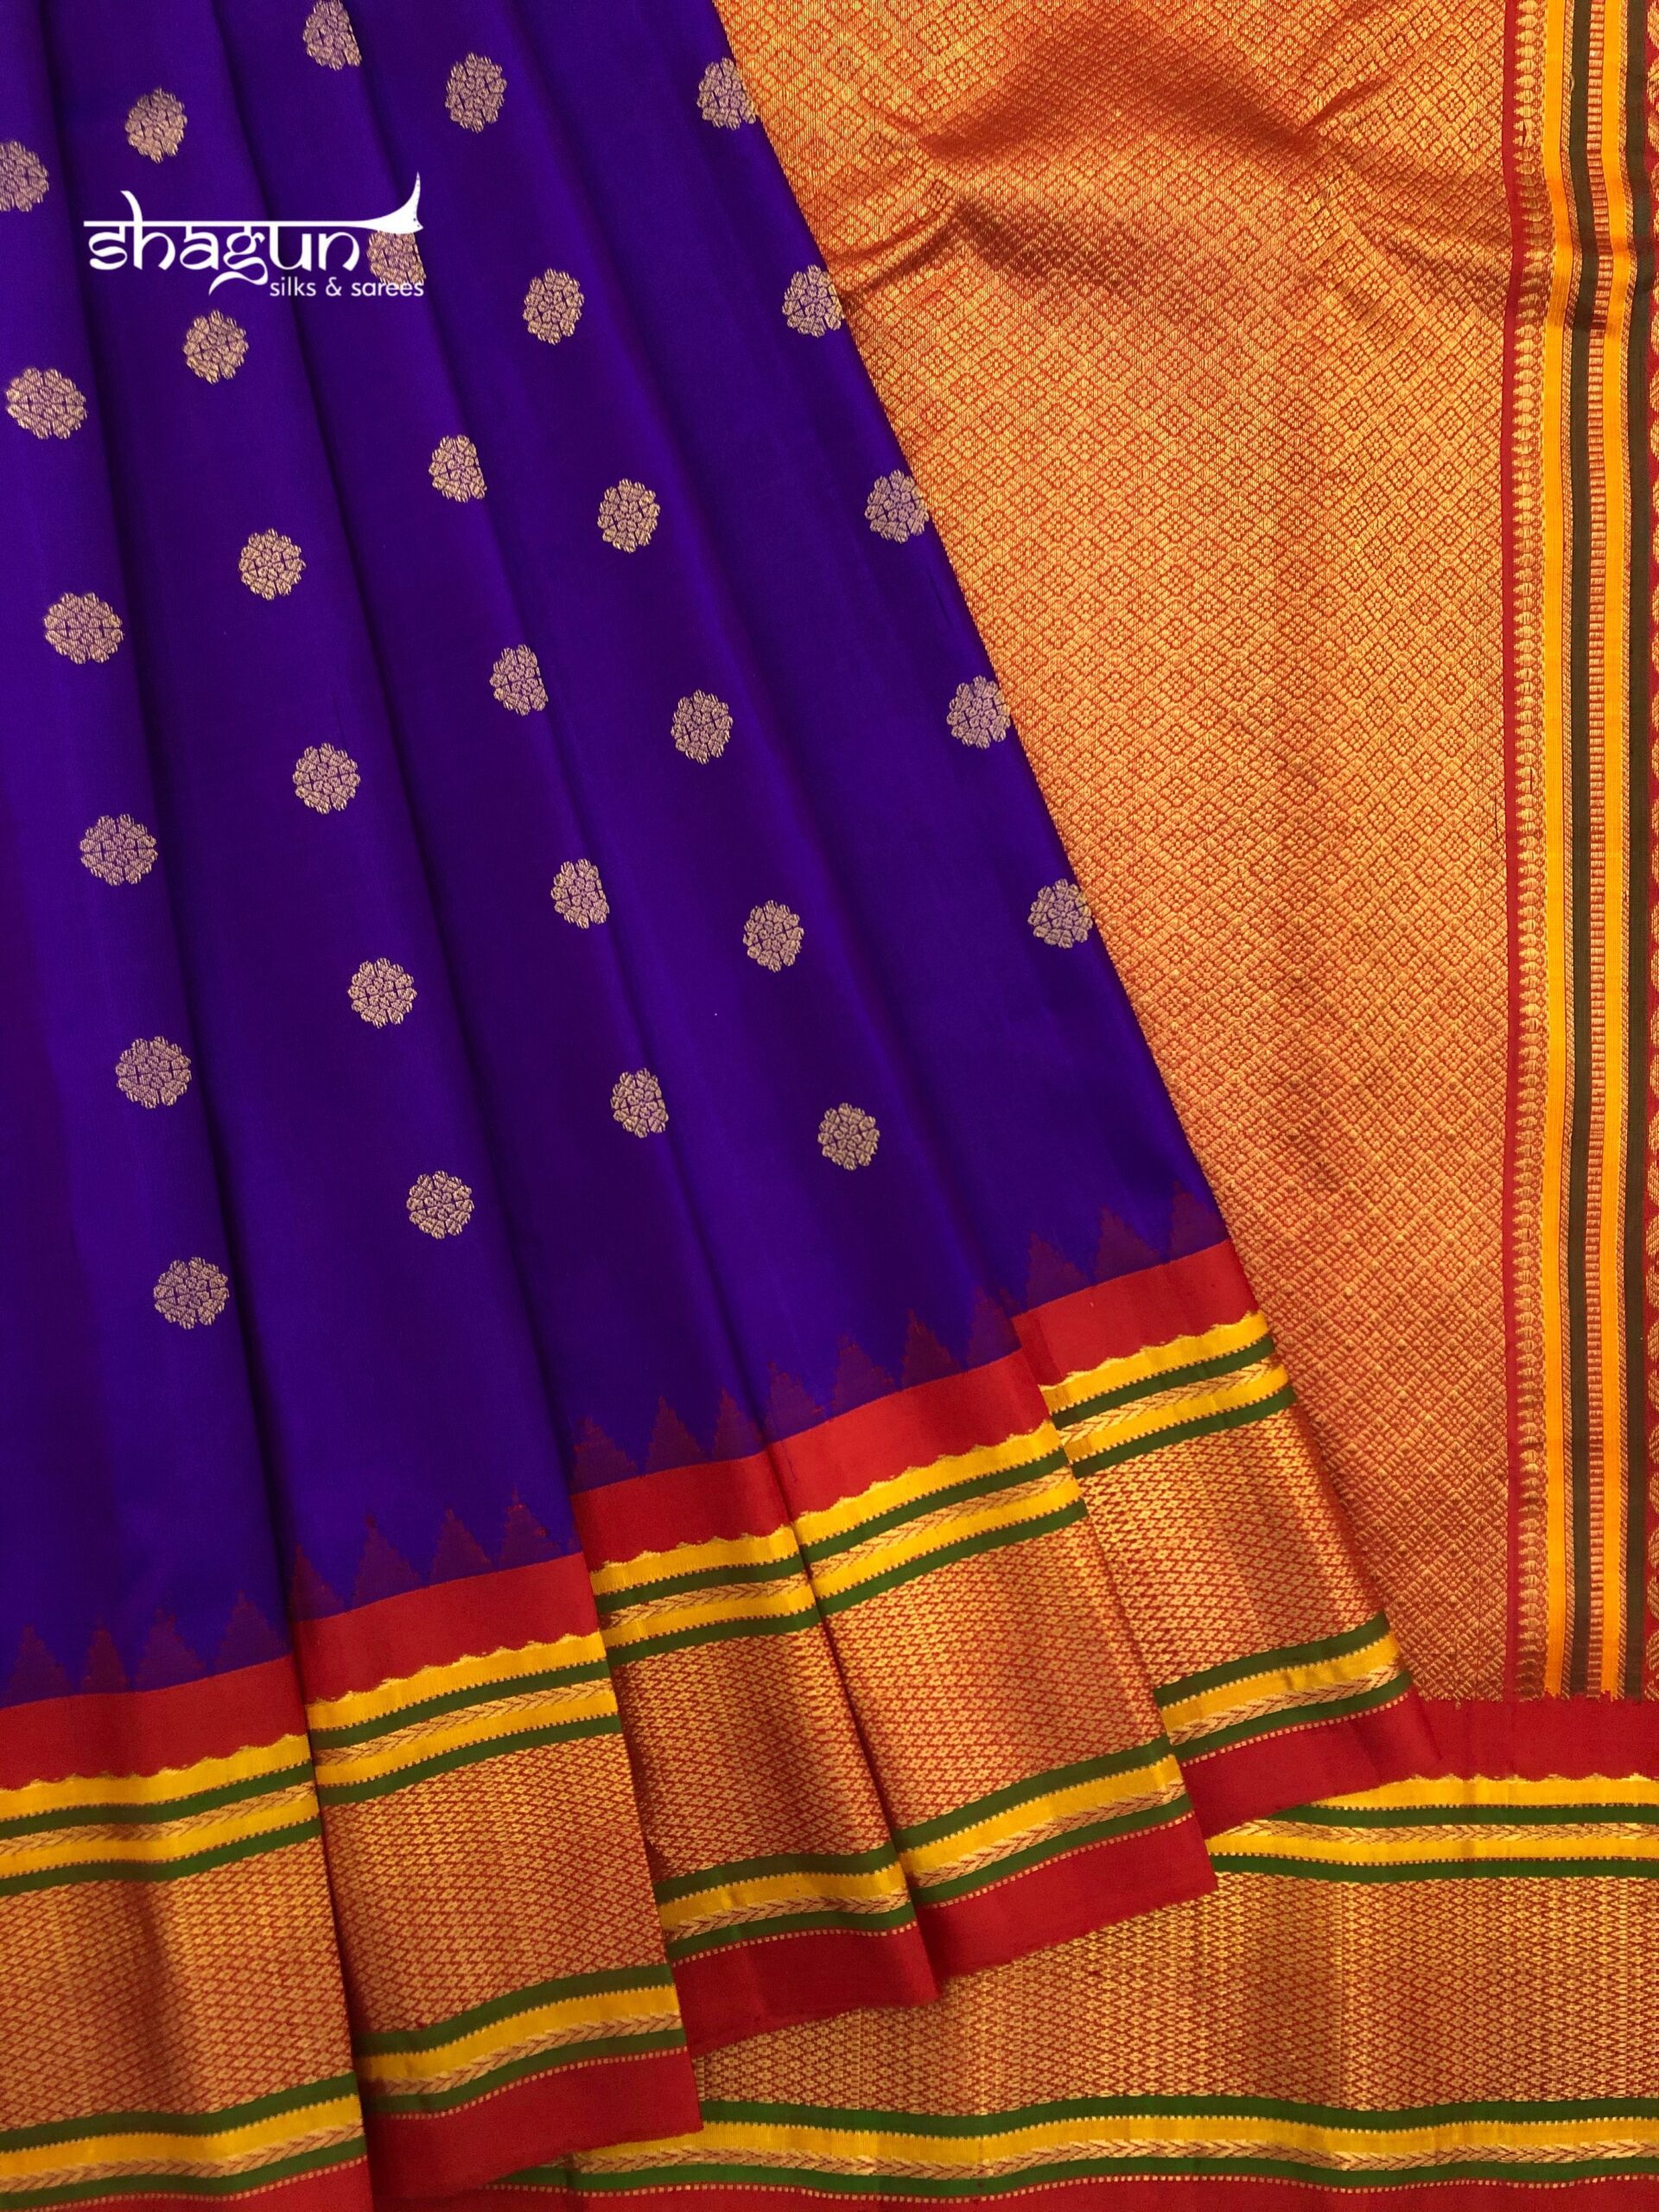 UNIQUE Color combination Gadwal Pattu Saree Collection From Kushi Designers  !! kushid… | Silk saree blouse designs, Bridal silk saree, Indian saree  blouses designs